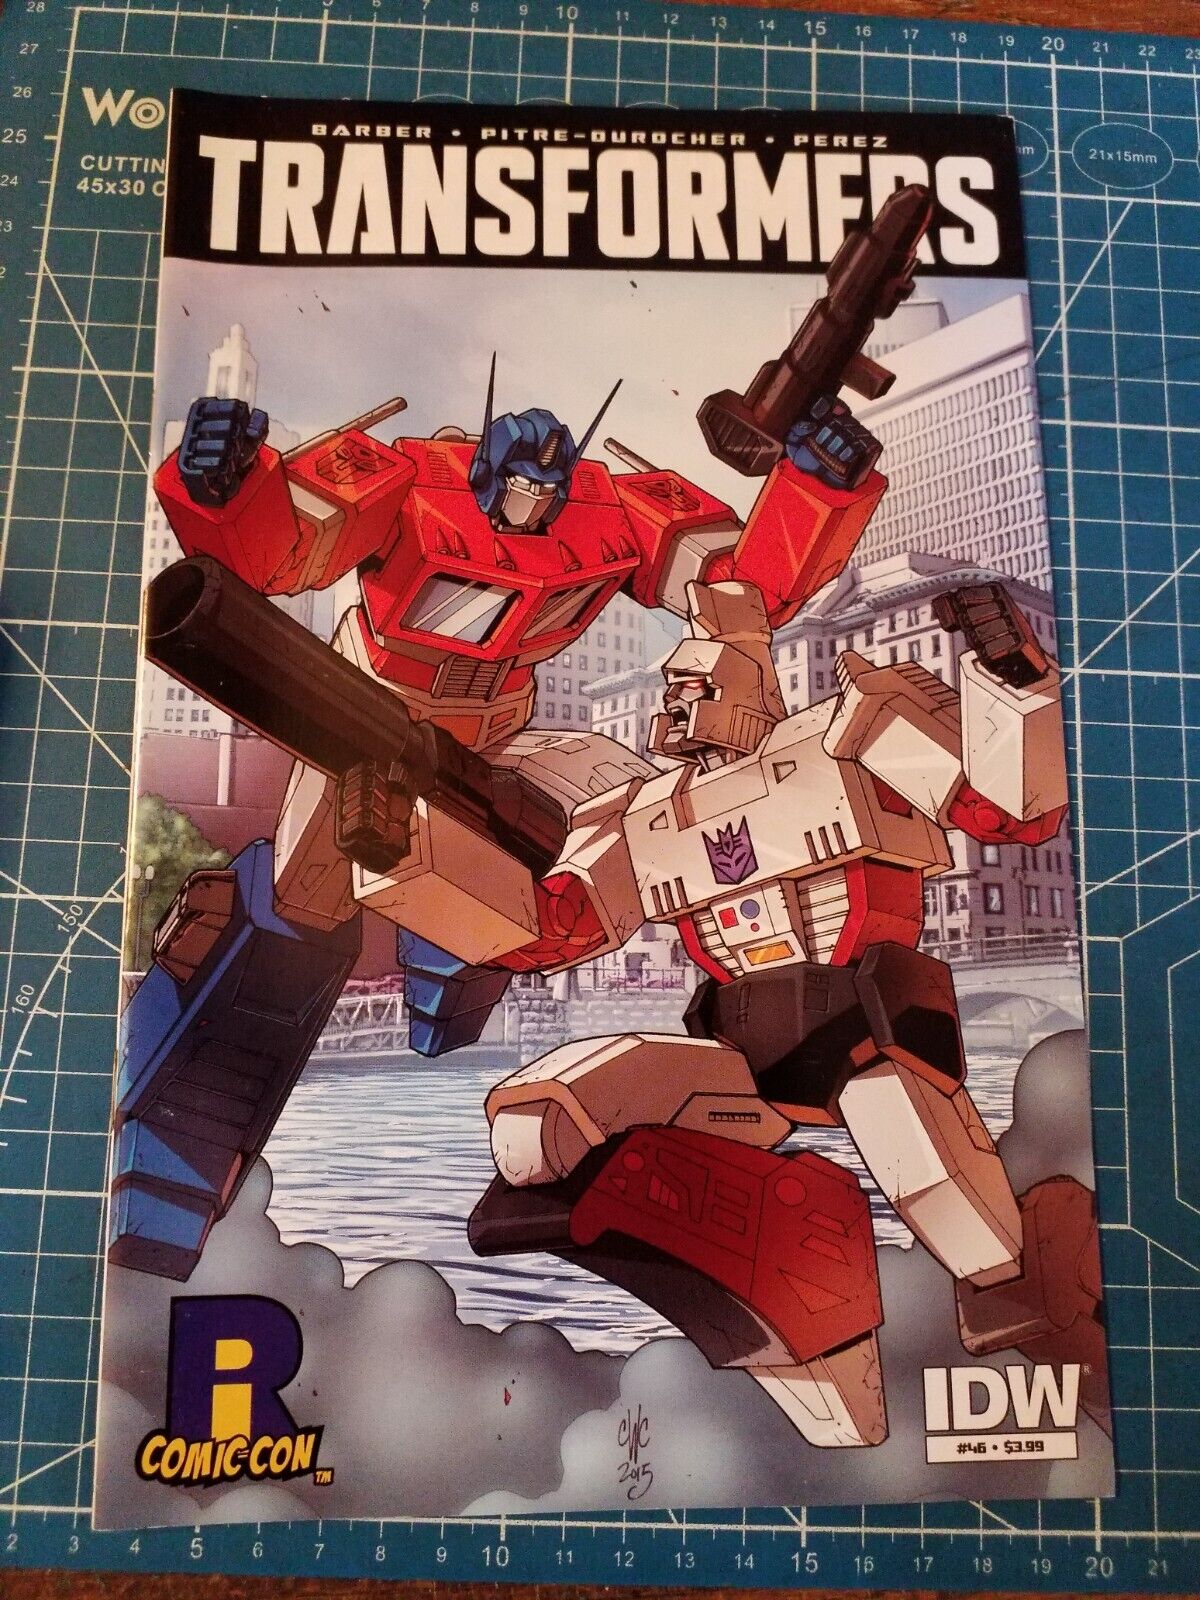 Transformers 46 RICC Variant High Grade 9.4 IDW Comic Book H9-103